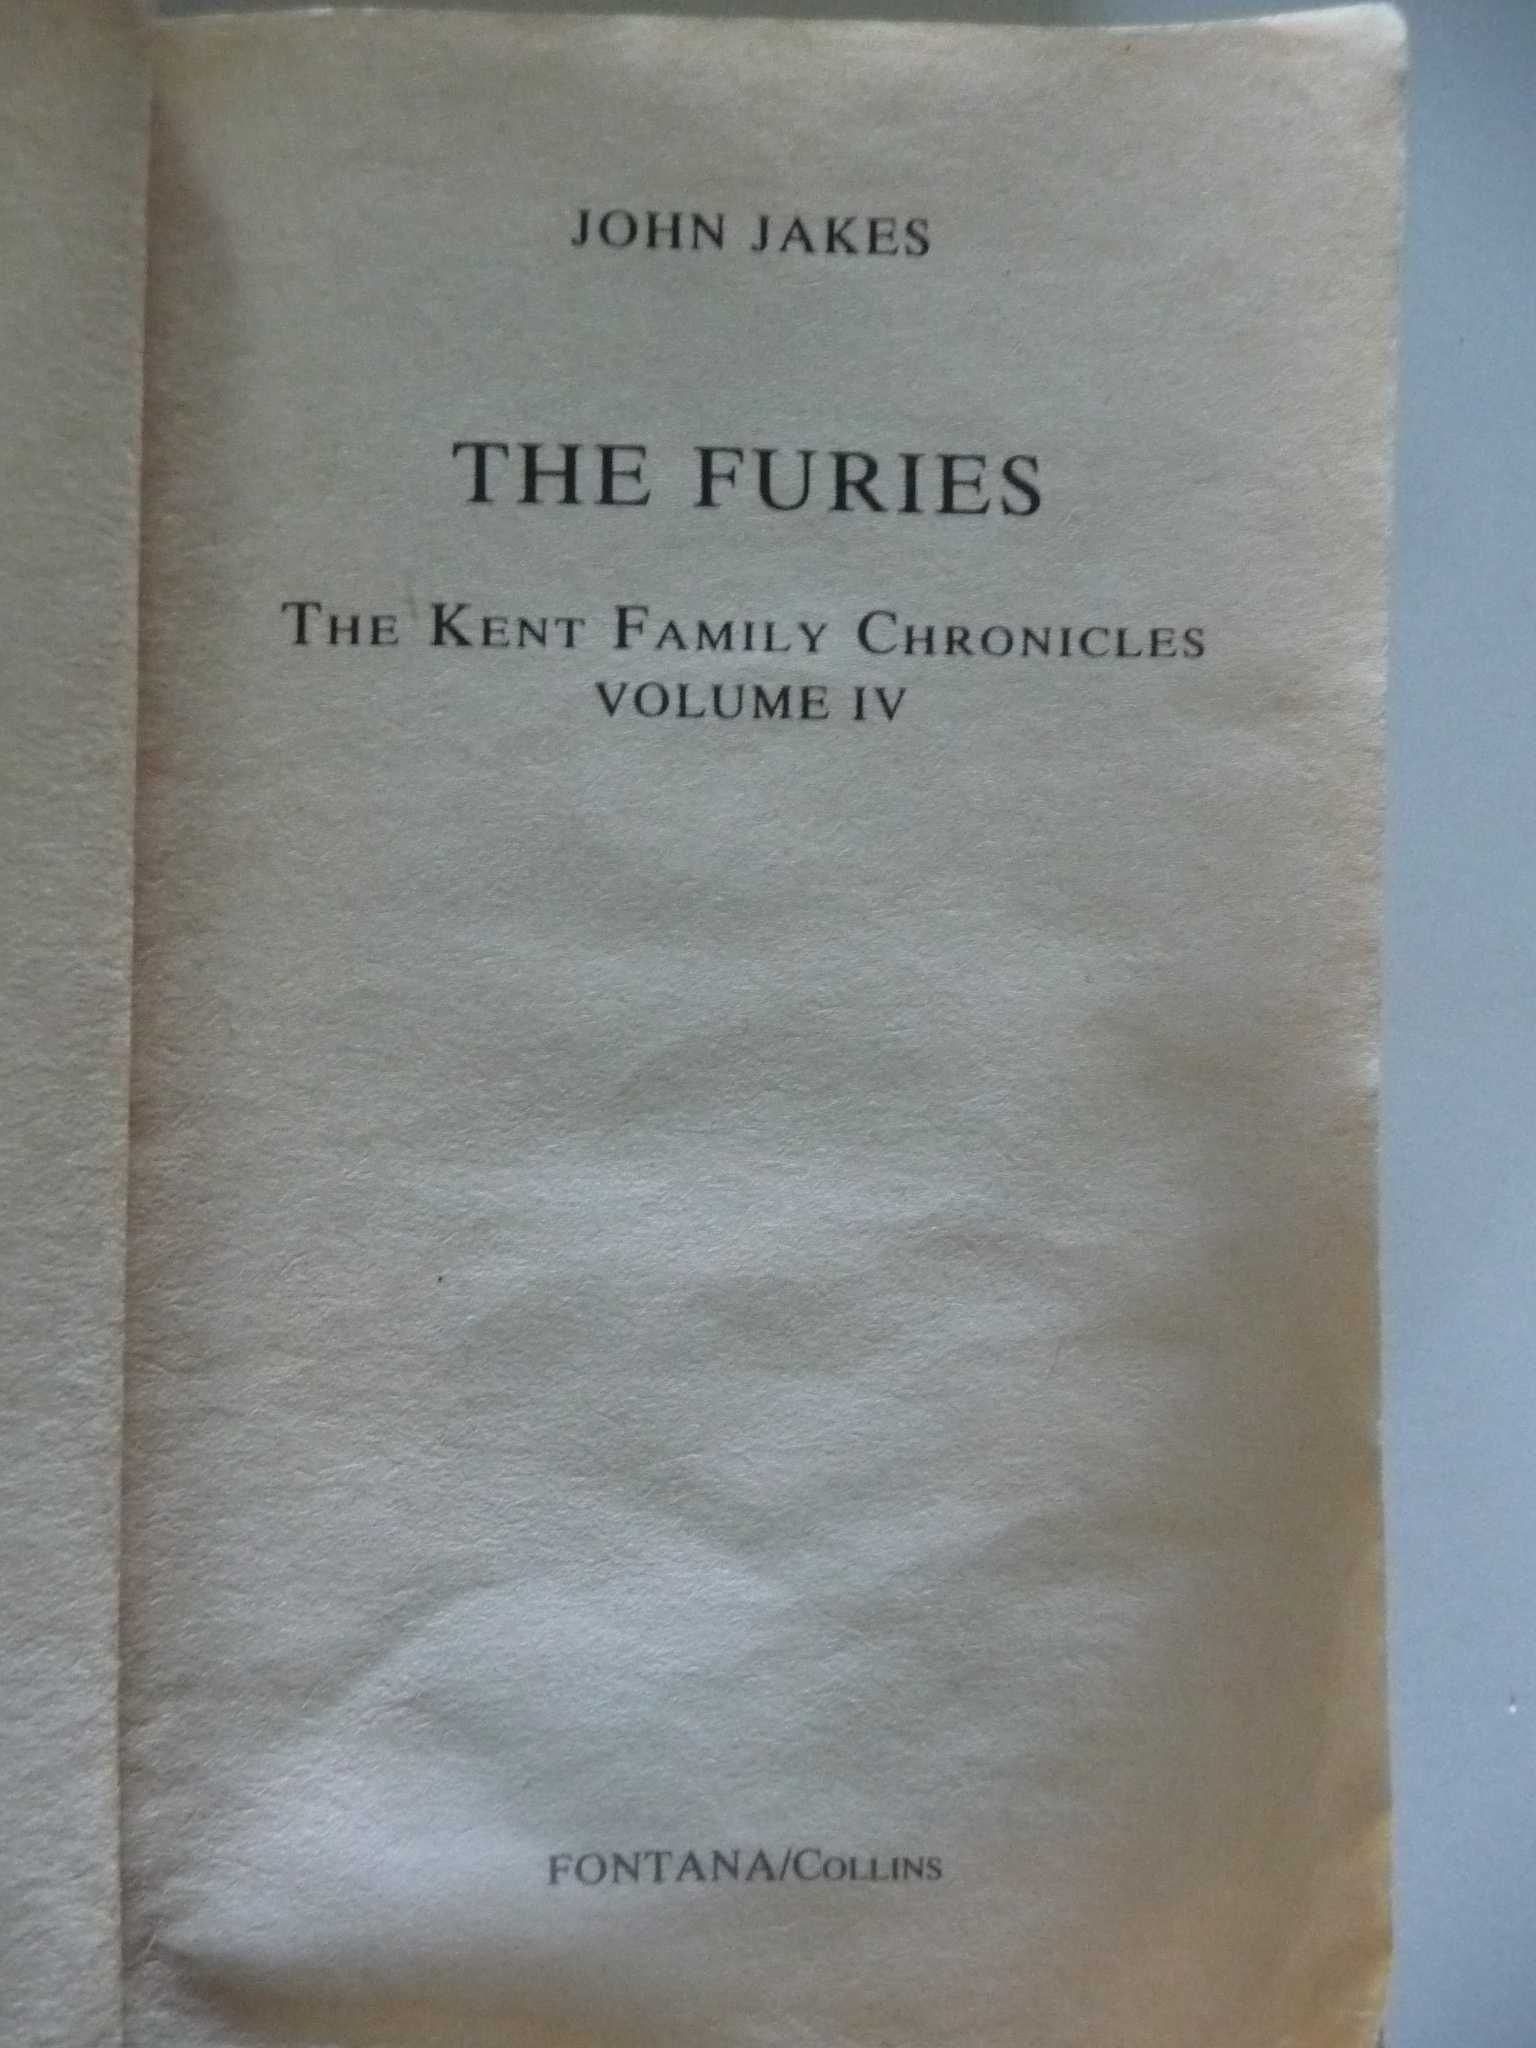 The Furies - John Jakes (The Kent Family Chronicles)